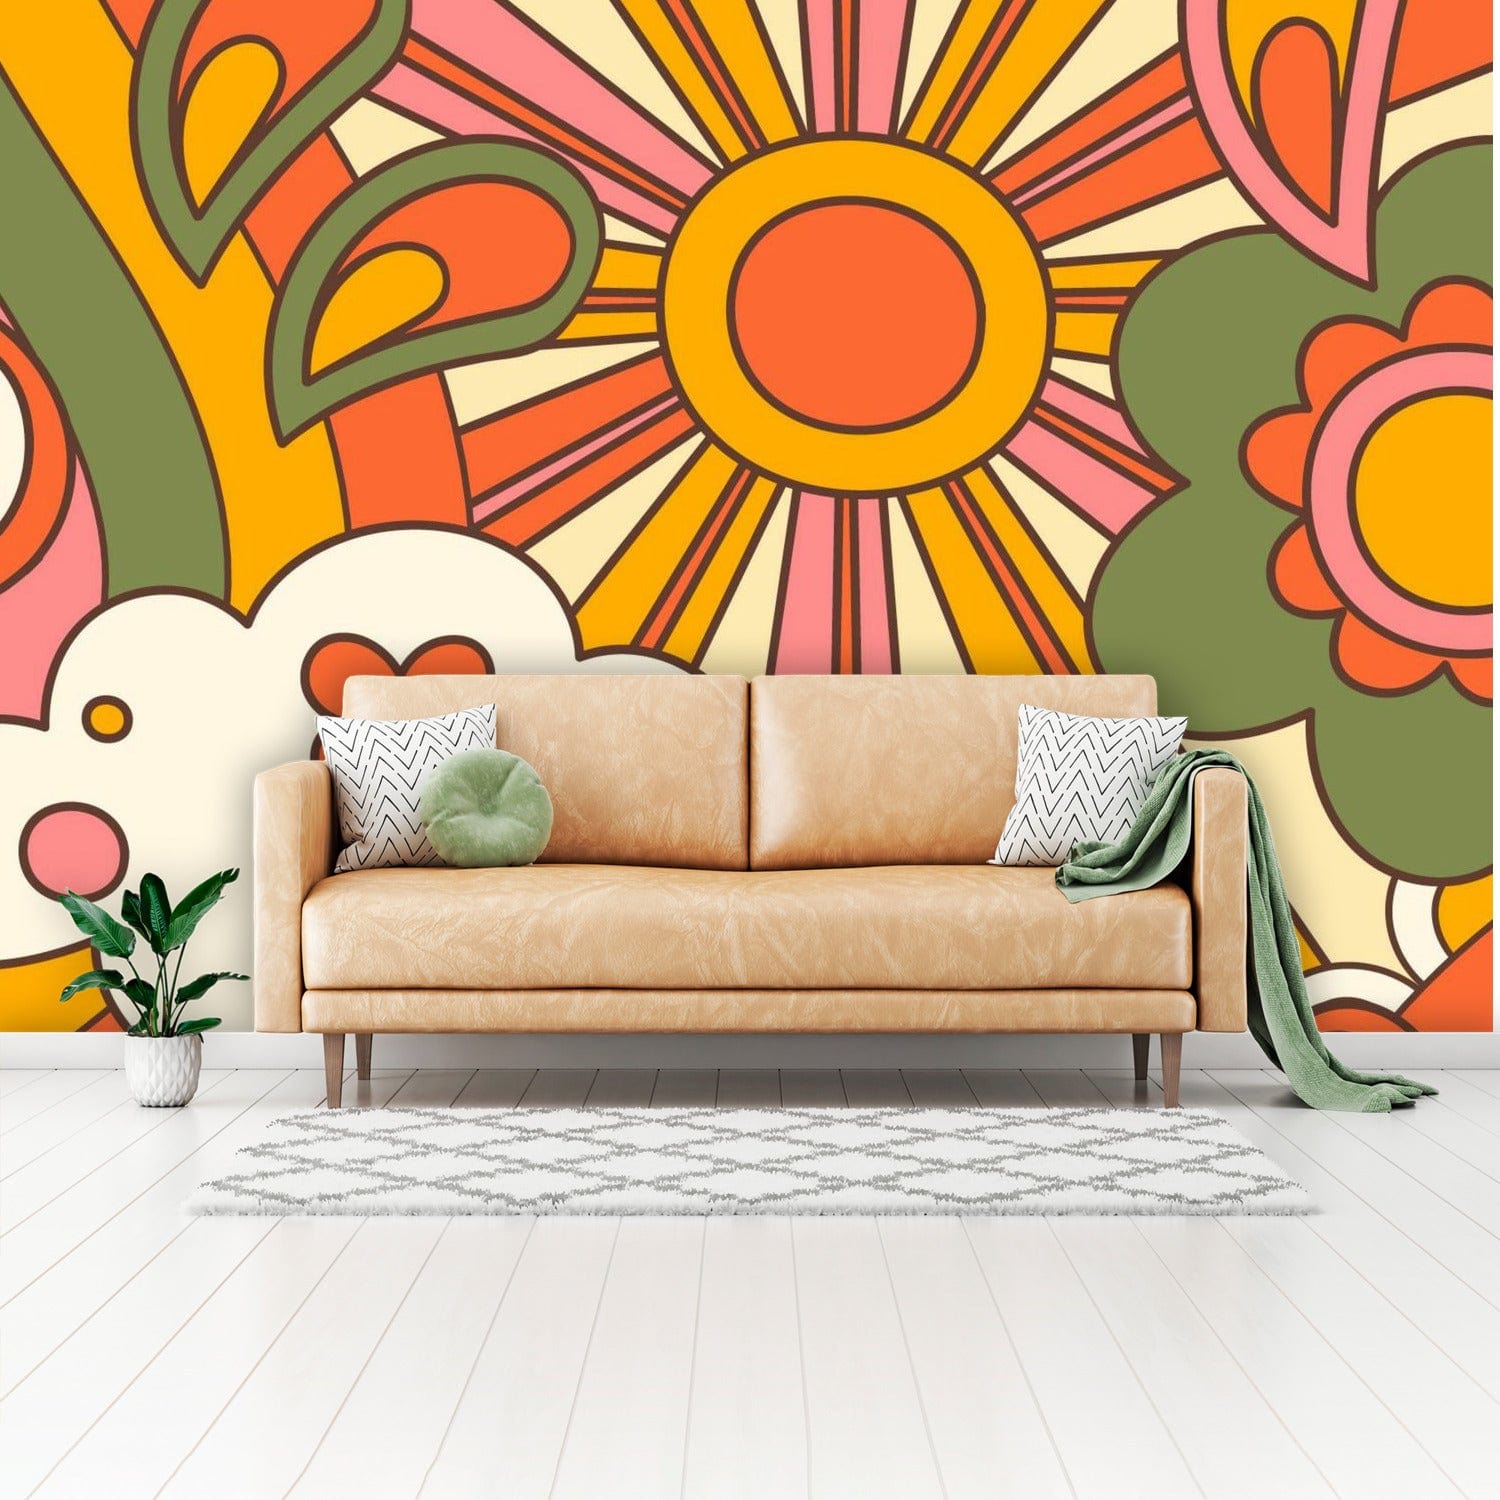 70's Groovy Sun, Flower Power Hippie Vibes, Peel And Stick Wall Murals